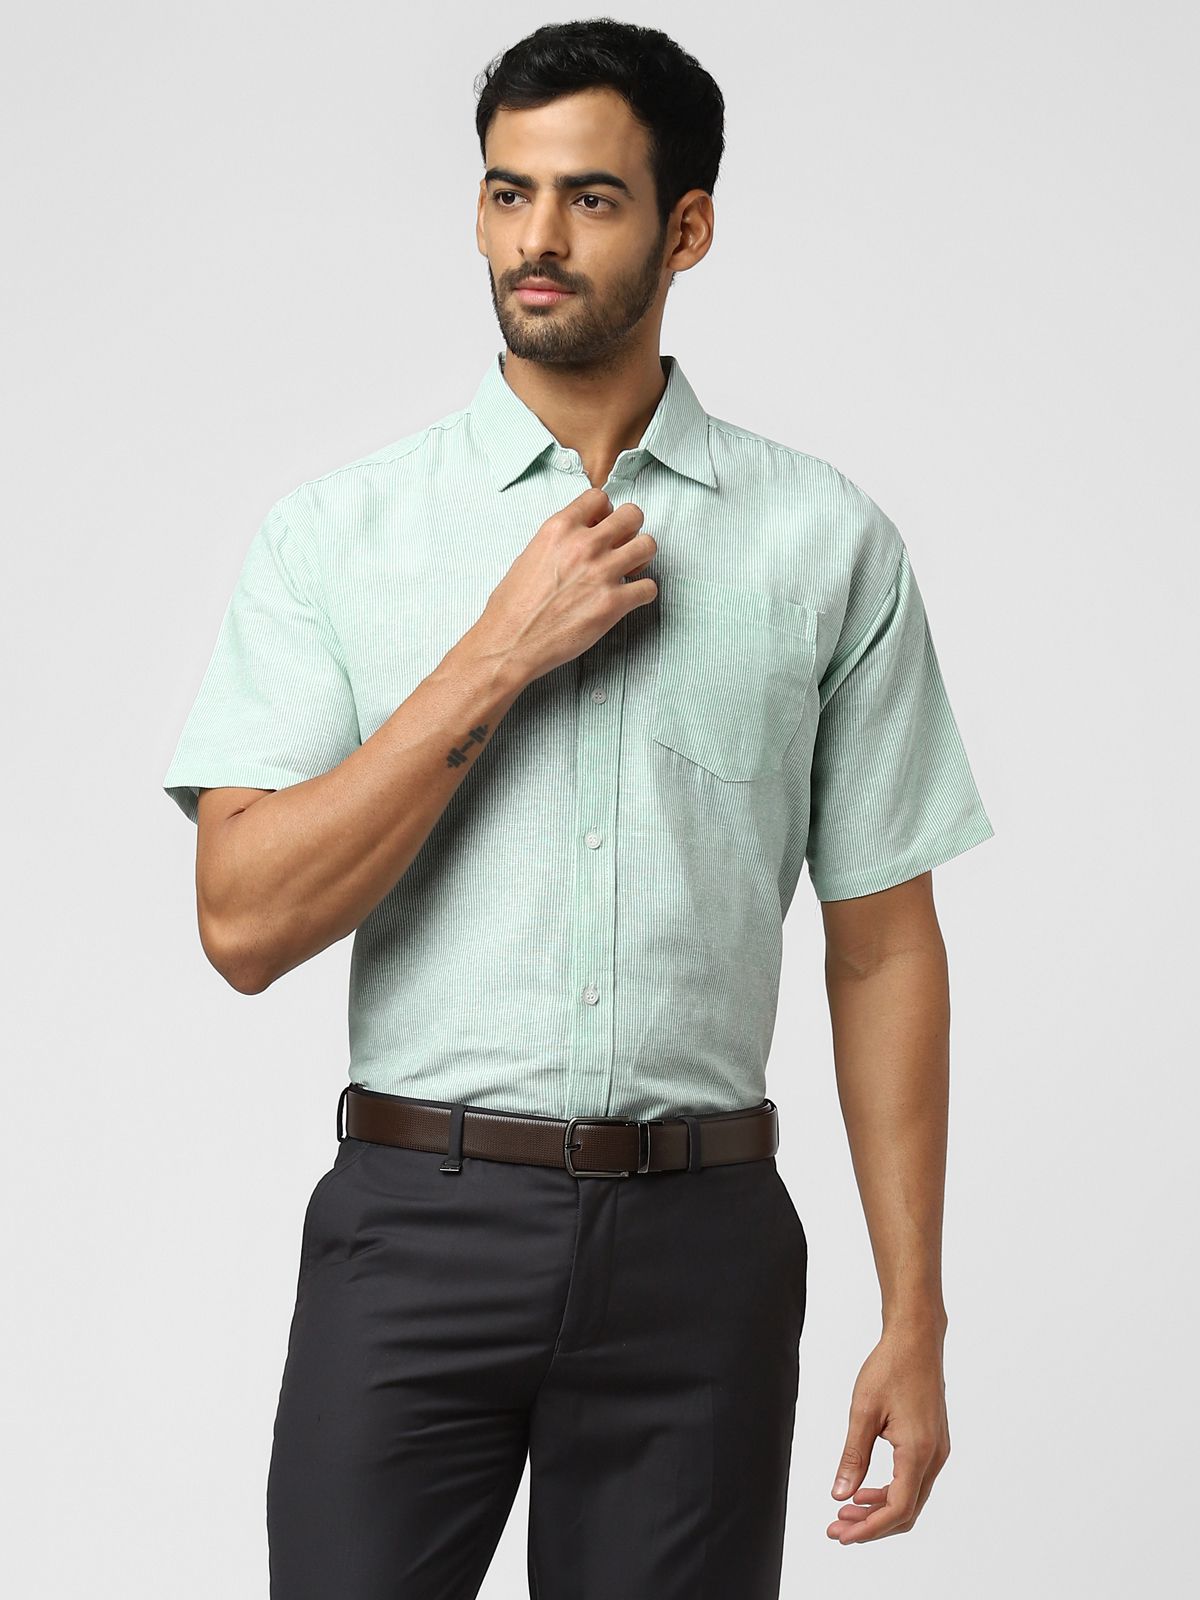     			DESHBANDHU DBK - Green Cotton Regular Fit Men's Casual Shirt (Pack of 1 )